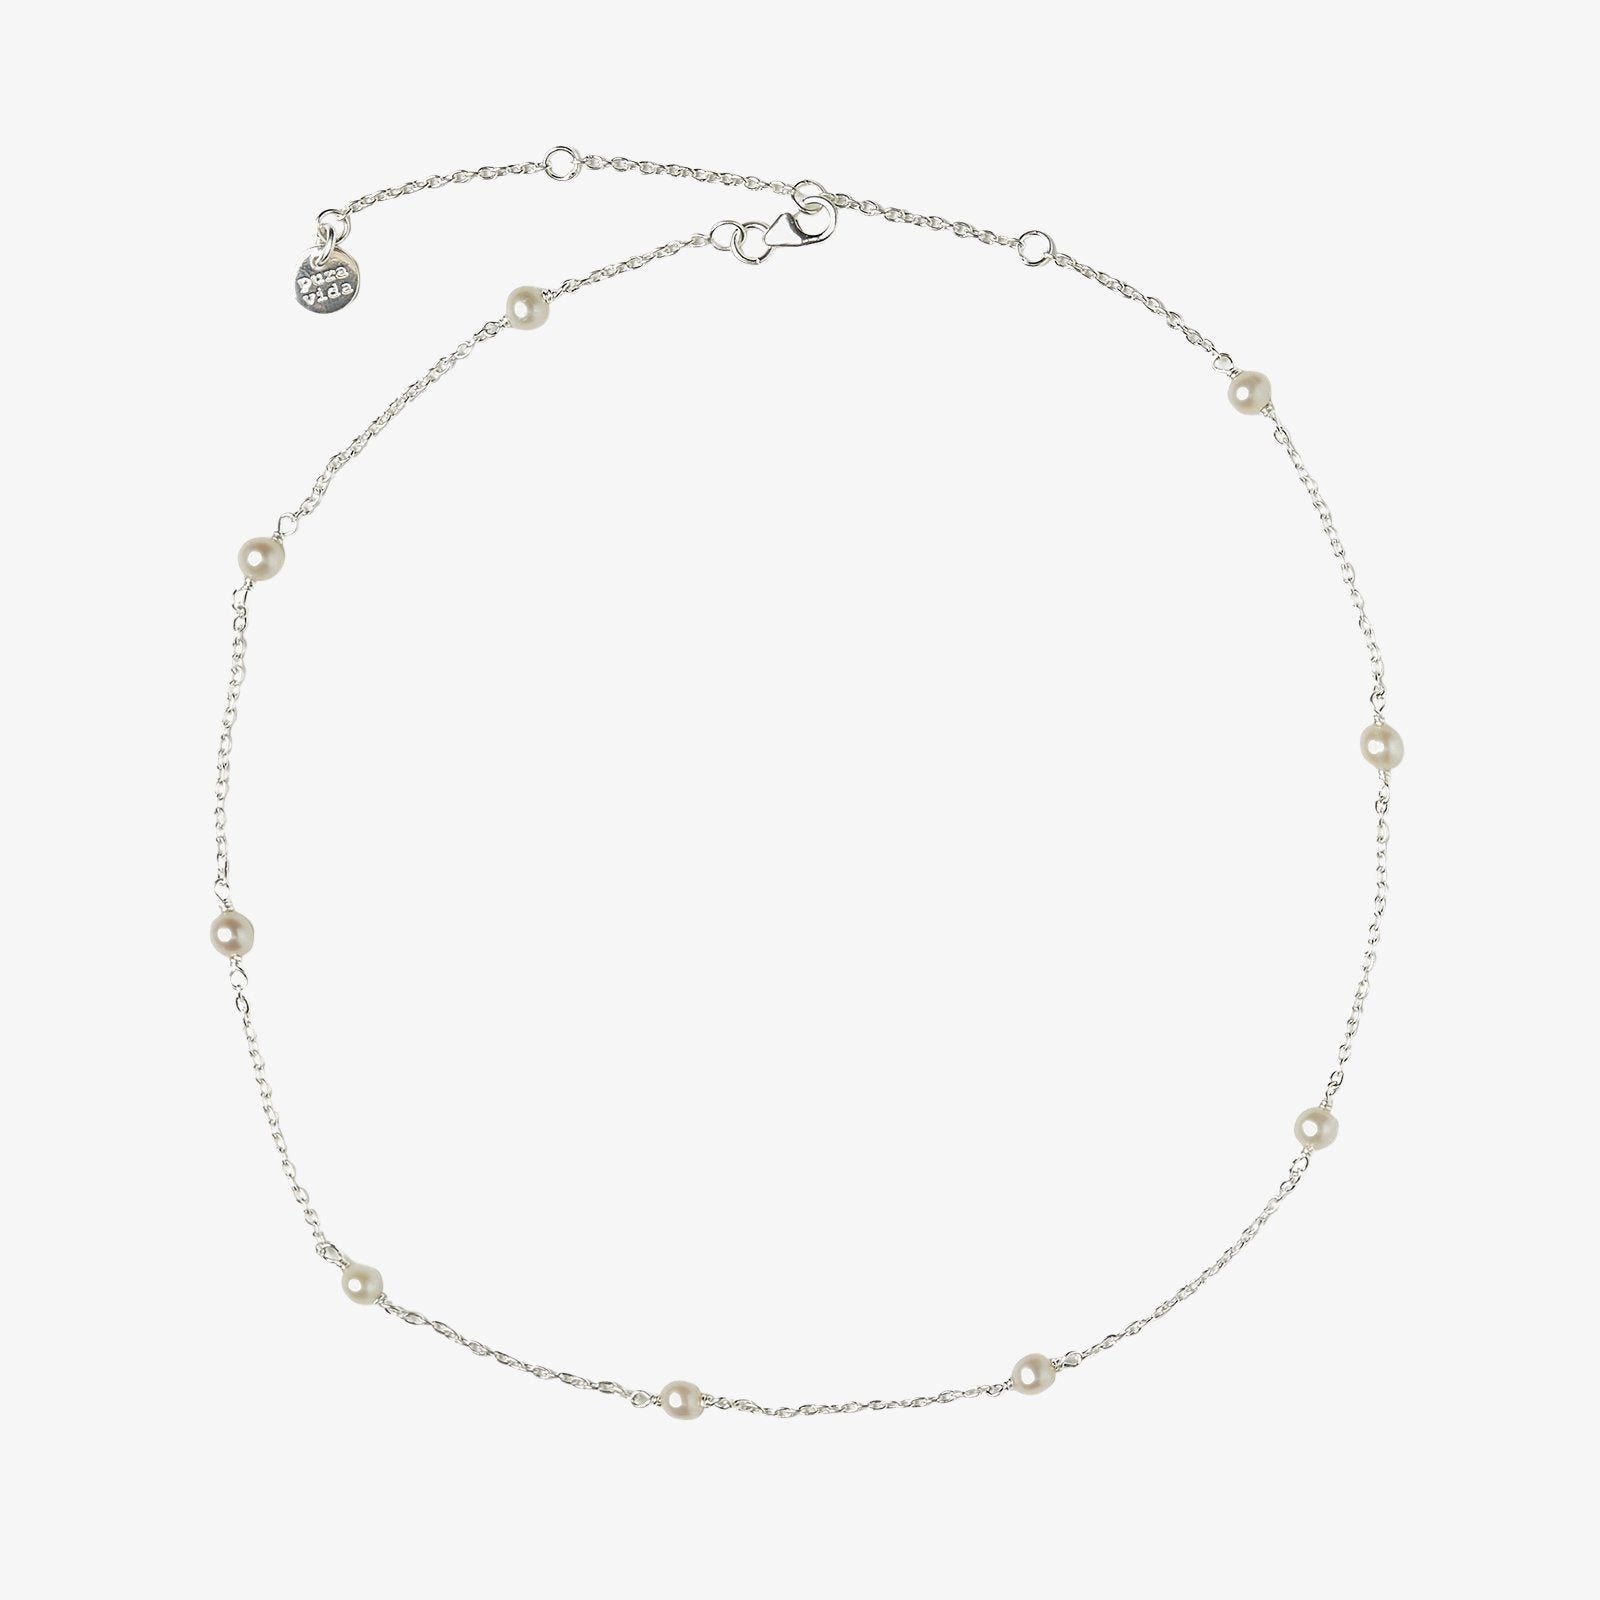 Chunky Twisted Choker Necklace Women Jewelry – PURAJOIA